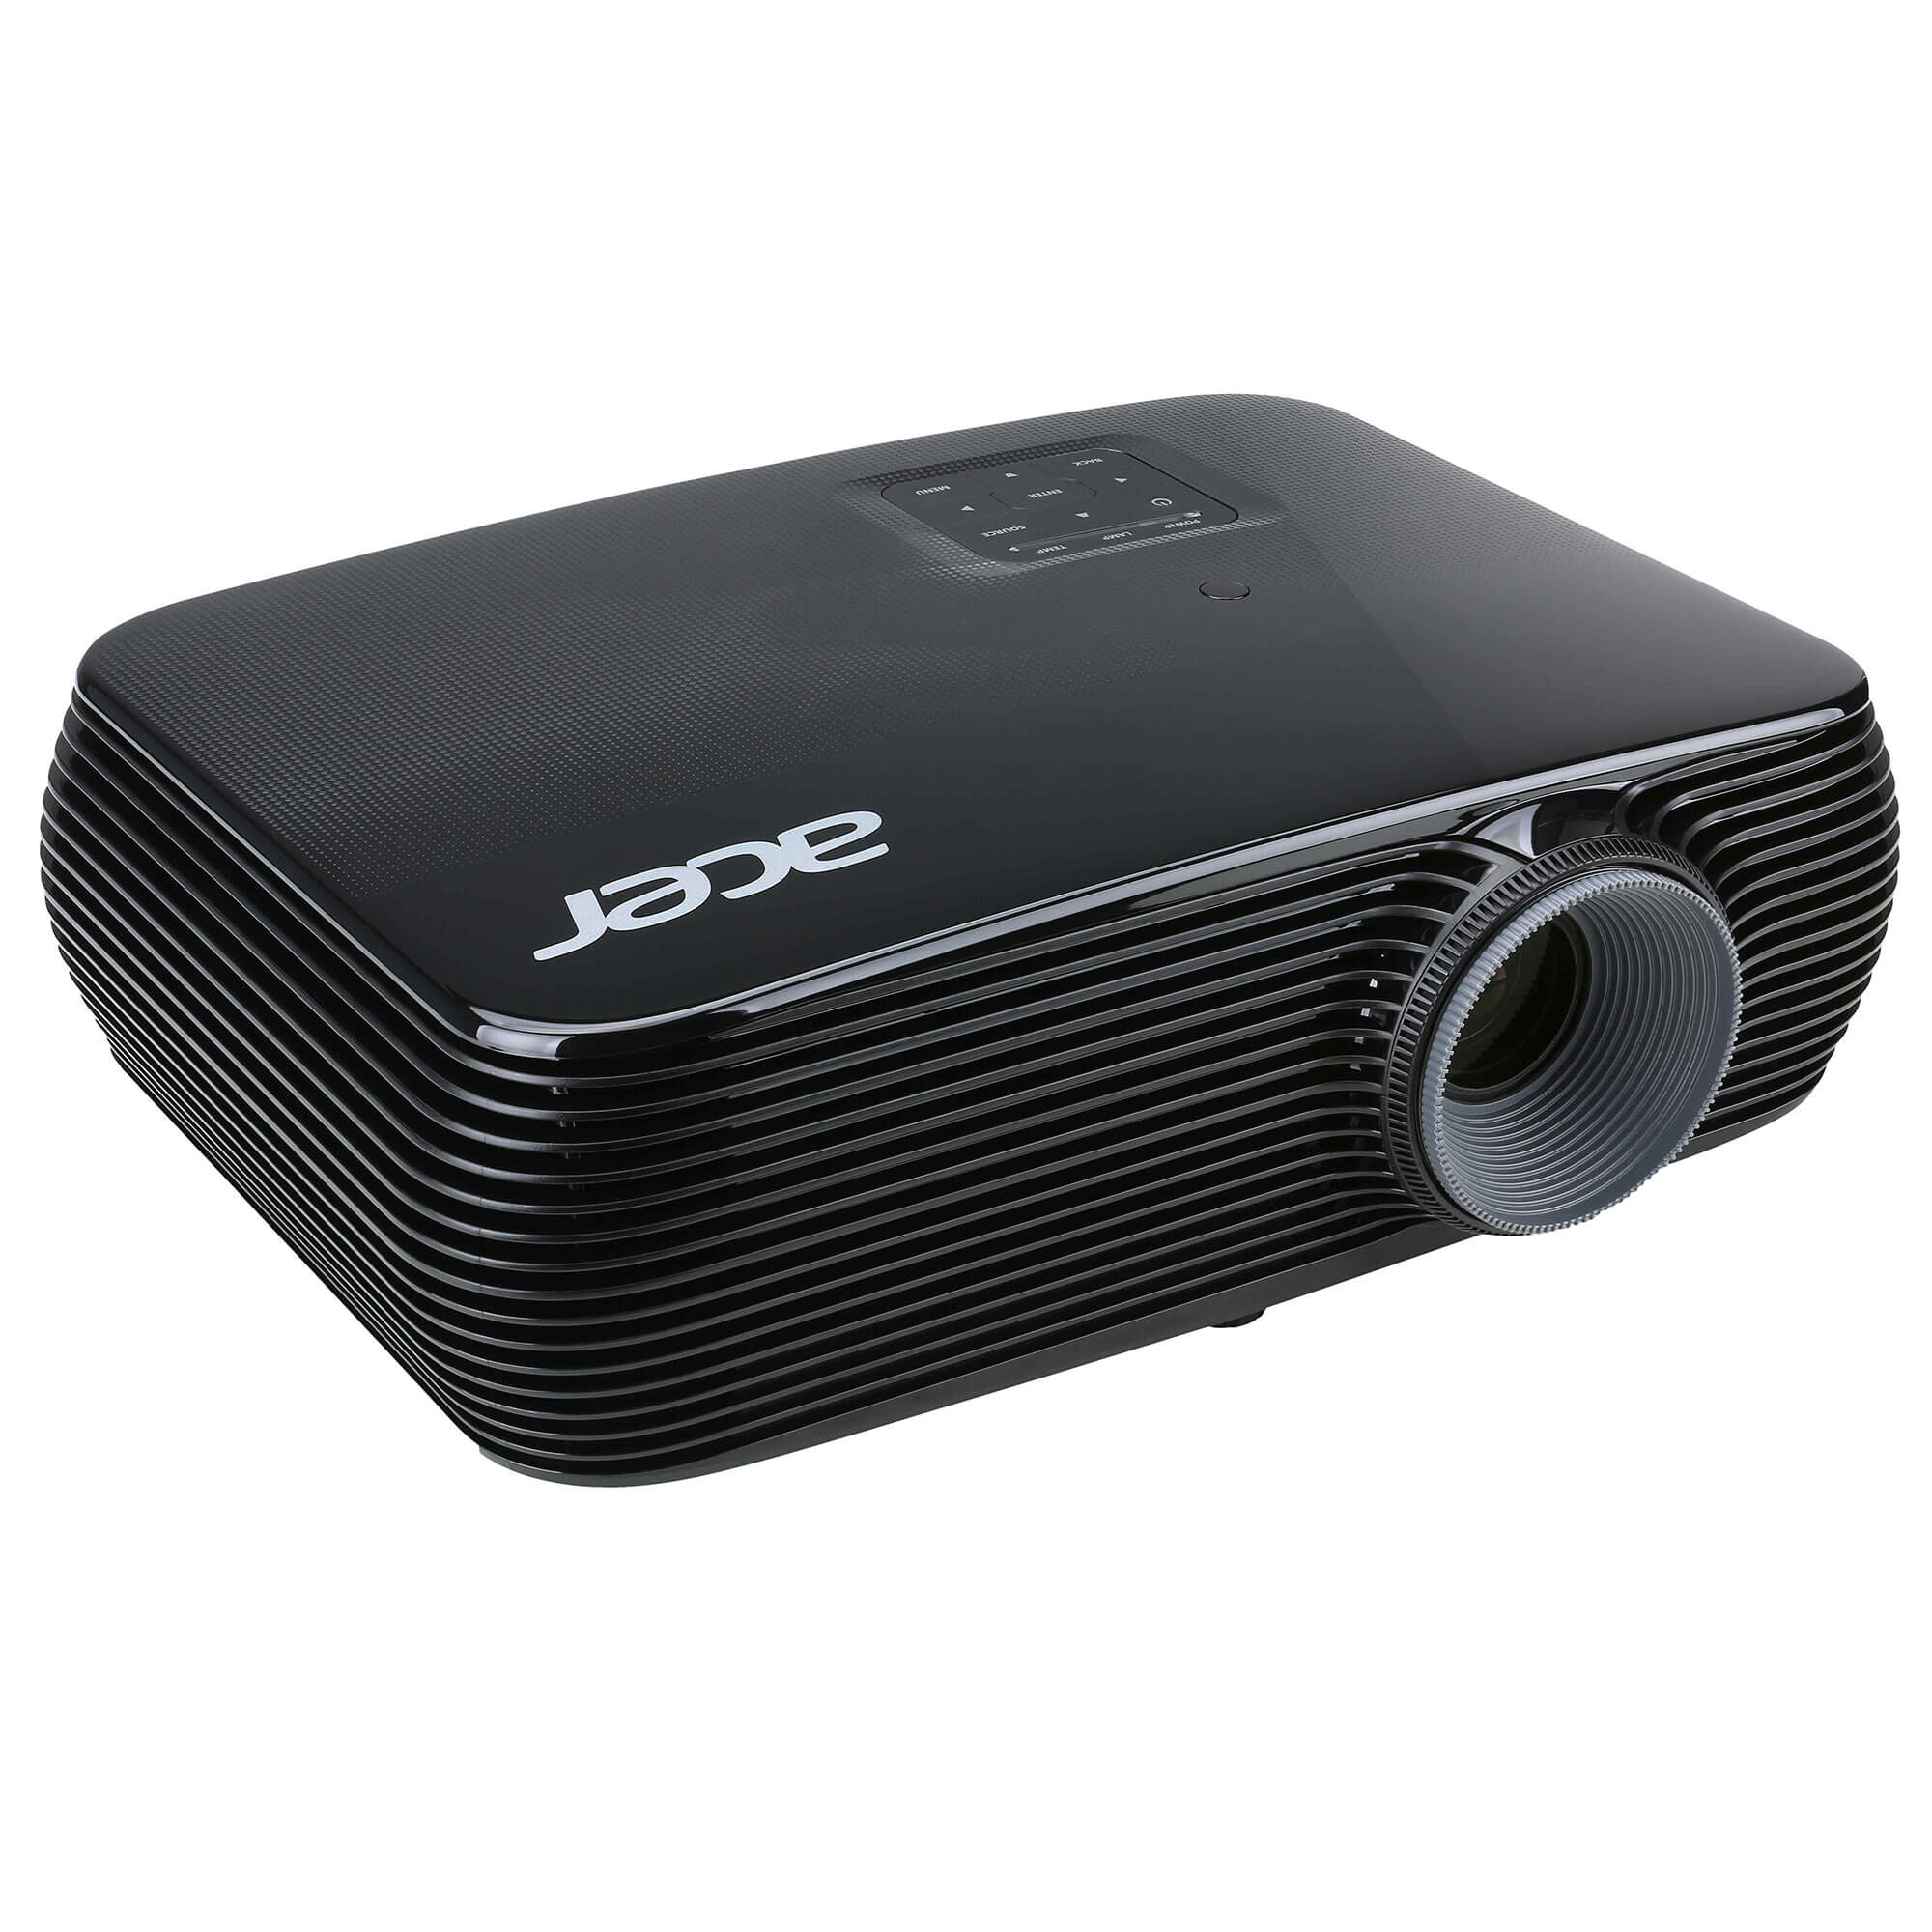  Videoproiector Acer P1286, XGA, 3300 lumeni 